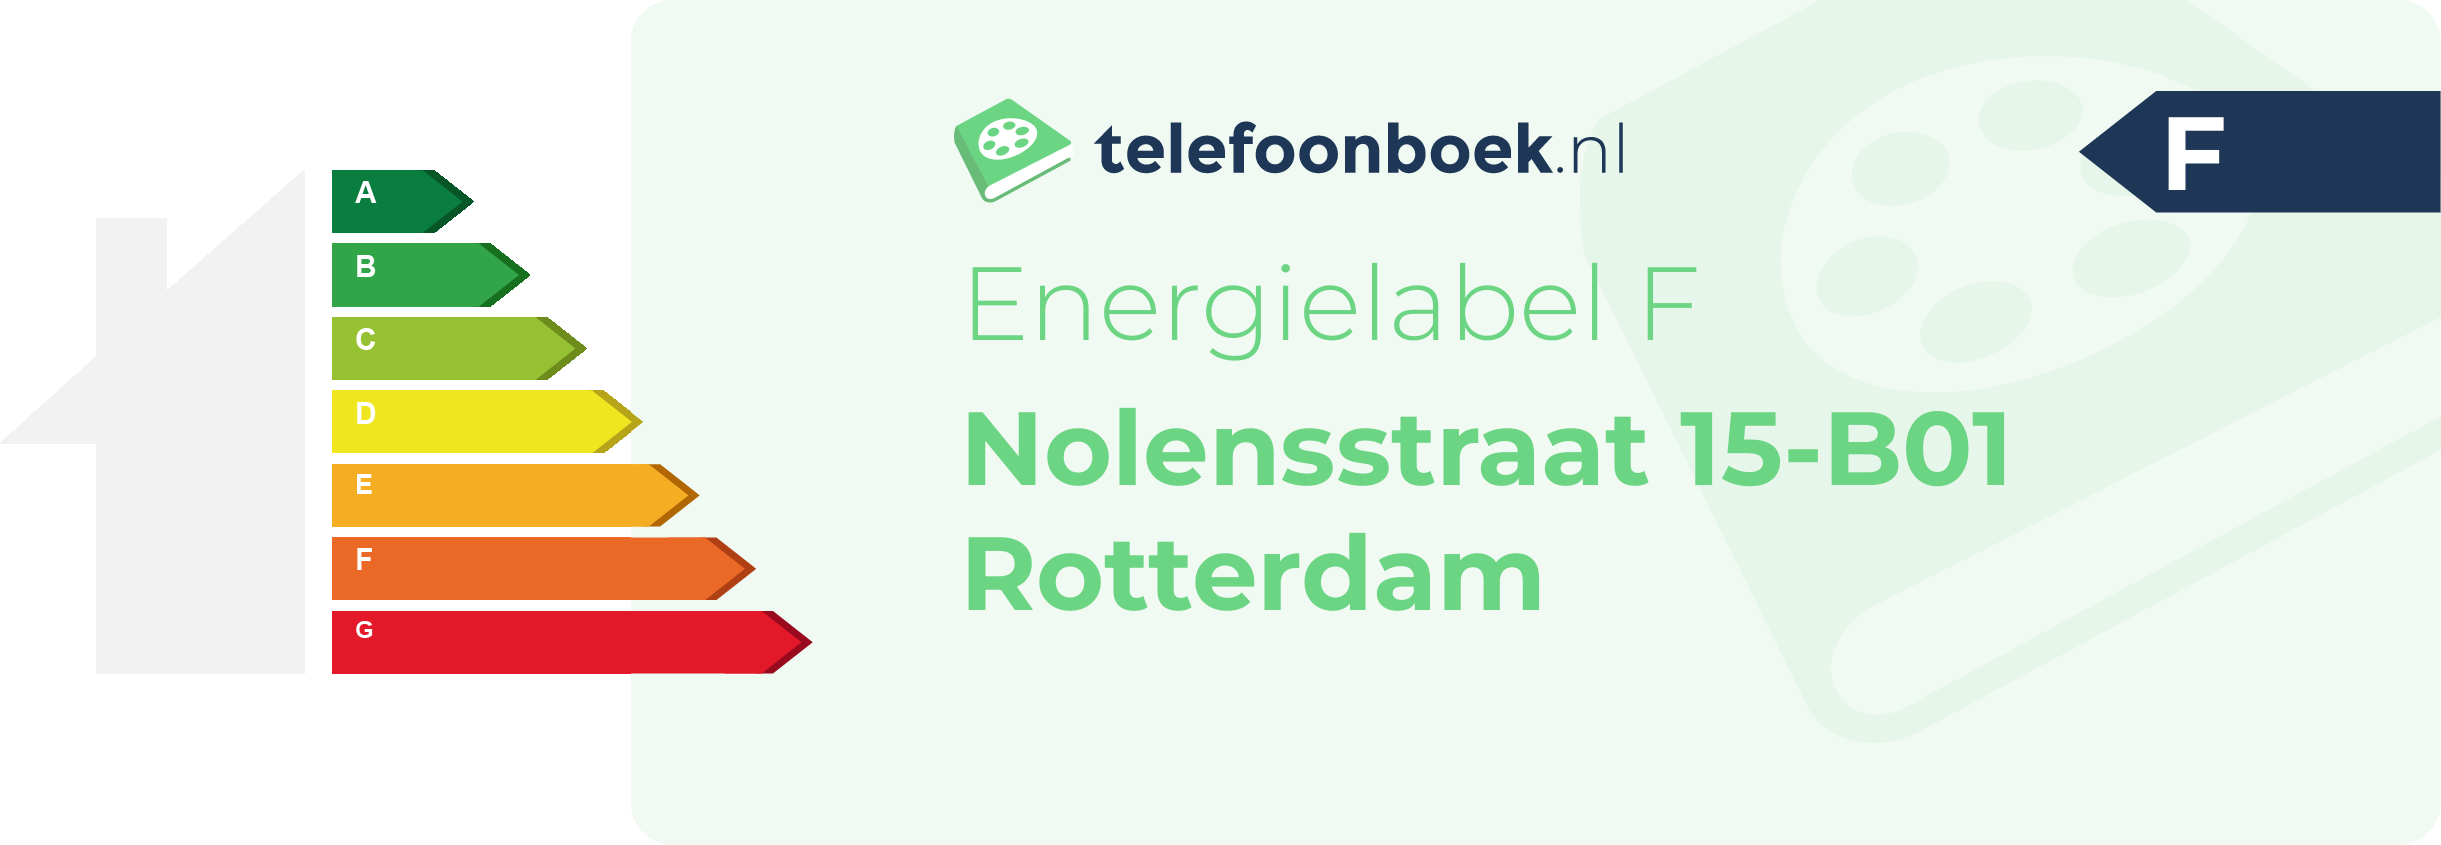 Energielabel Nolensstraat 15-B01 Rotterdam